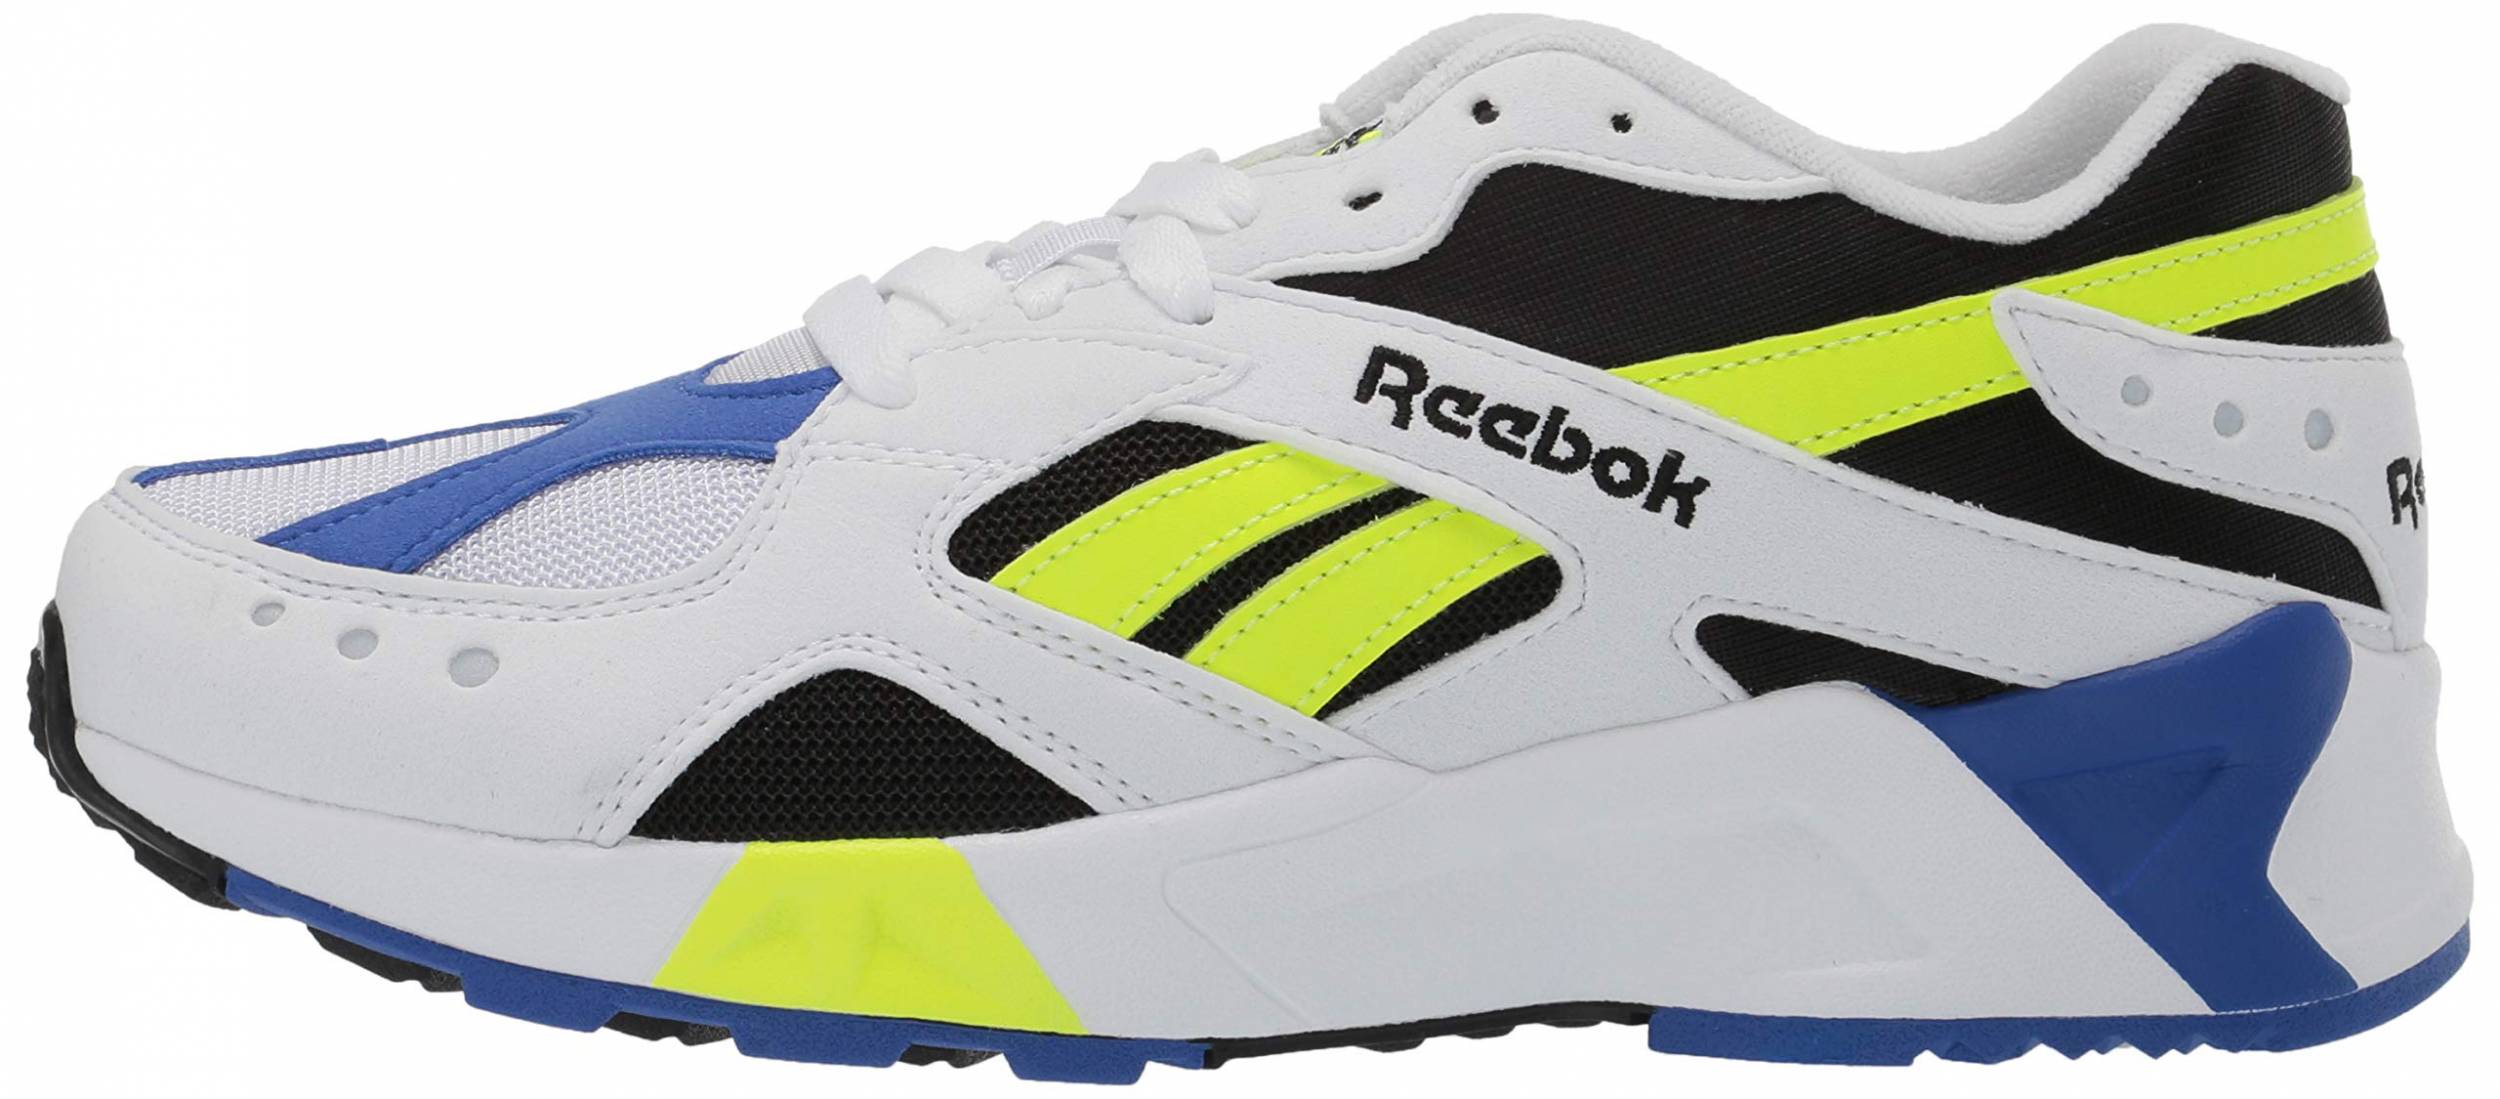 Reebok Aztrek White/Blue DV3900 Trainers Men Shoes Textile Synthetic 